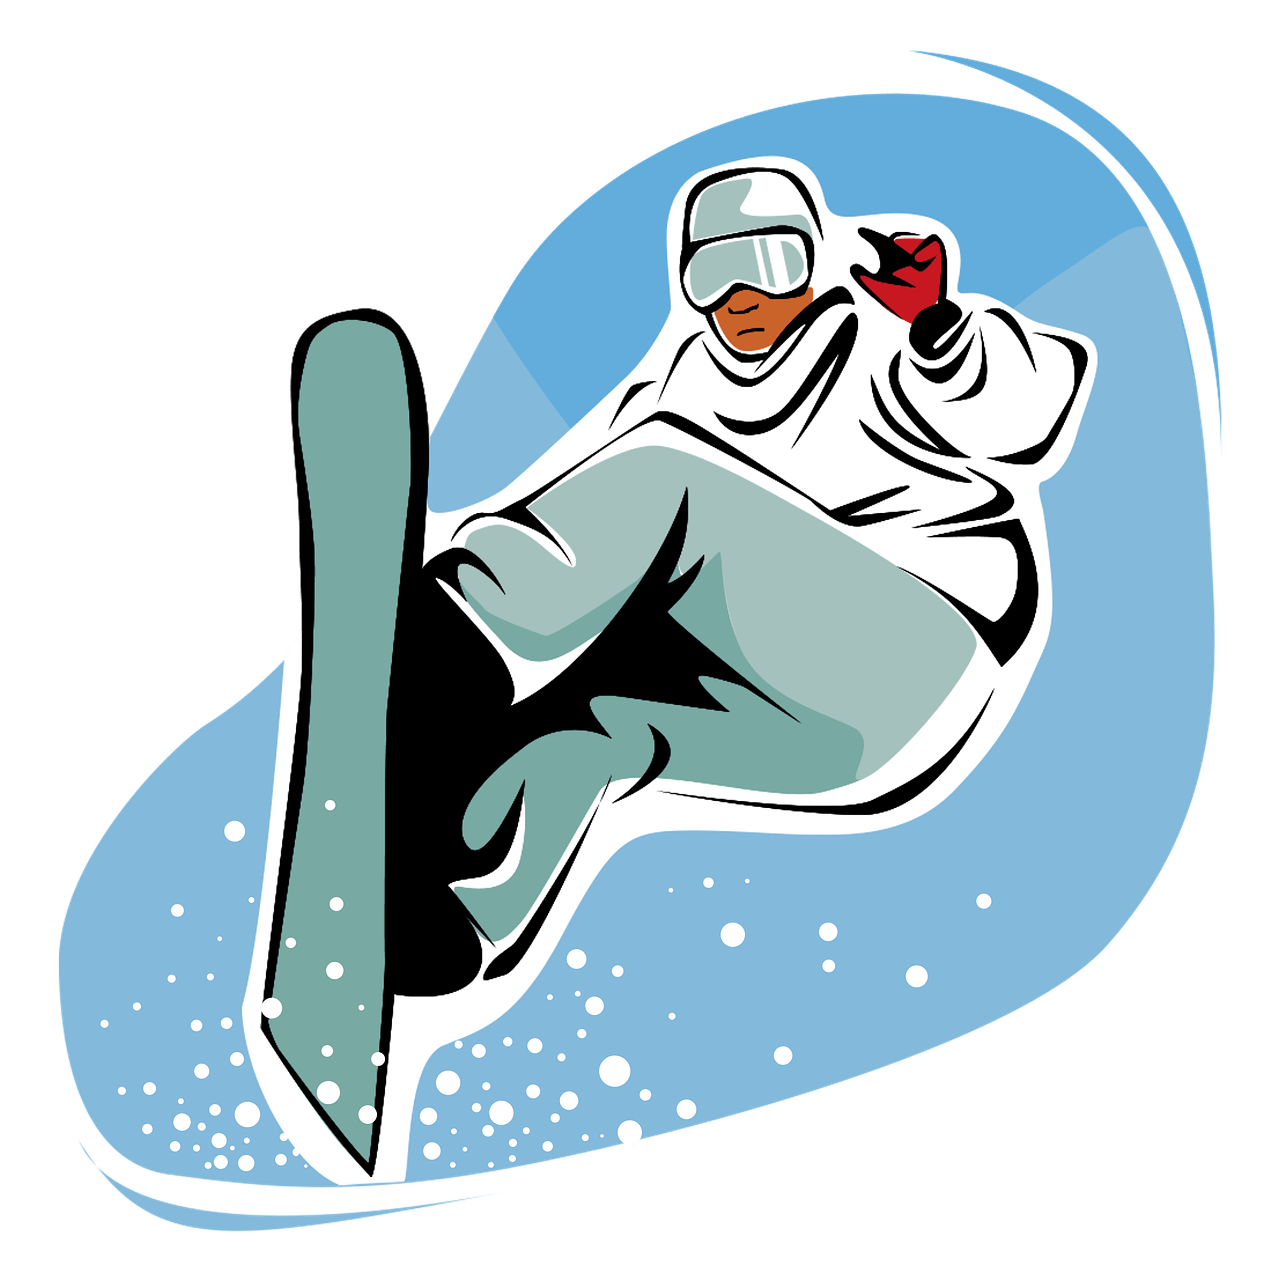 Snowboard png transparent images. Clipart winter sport